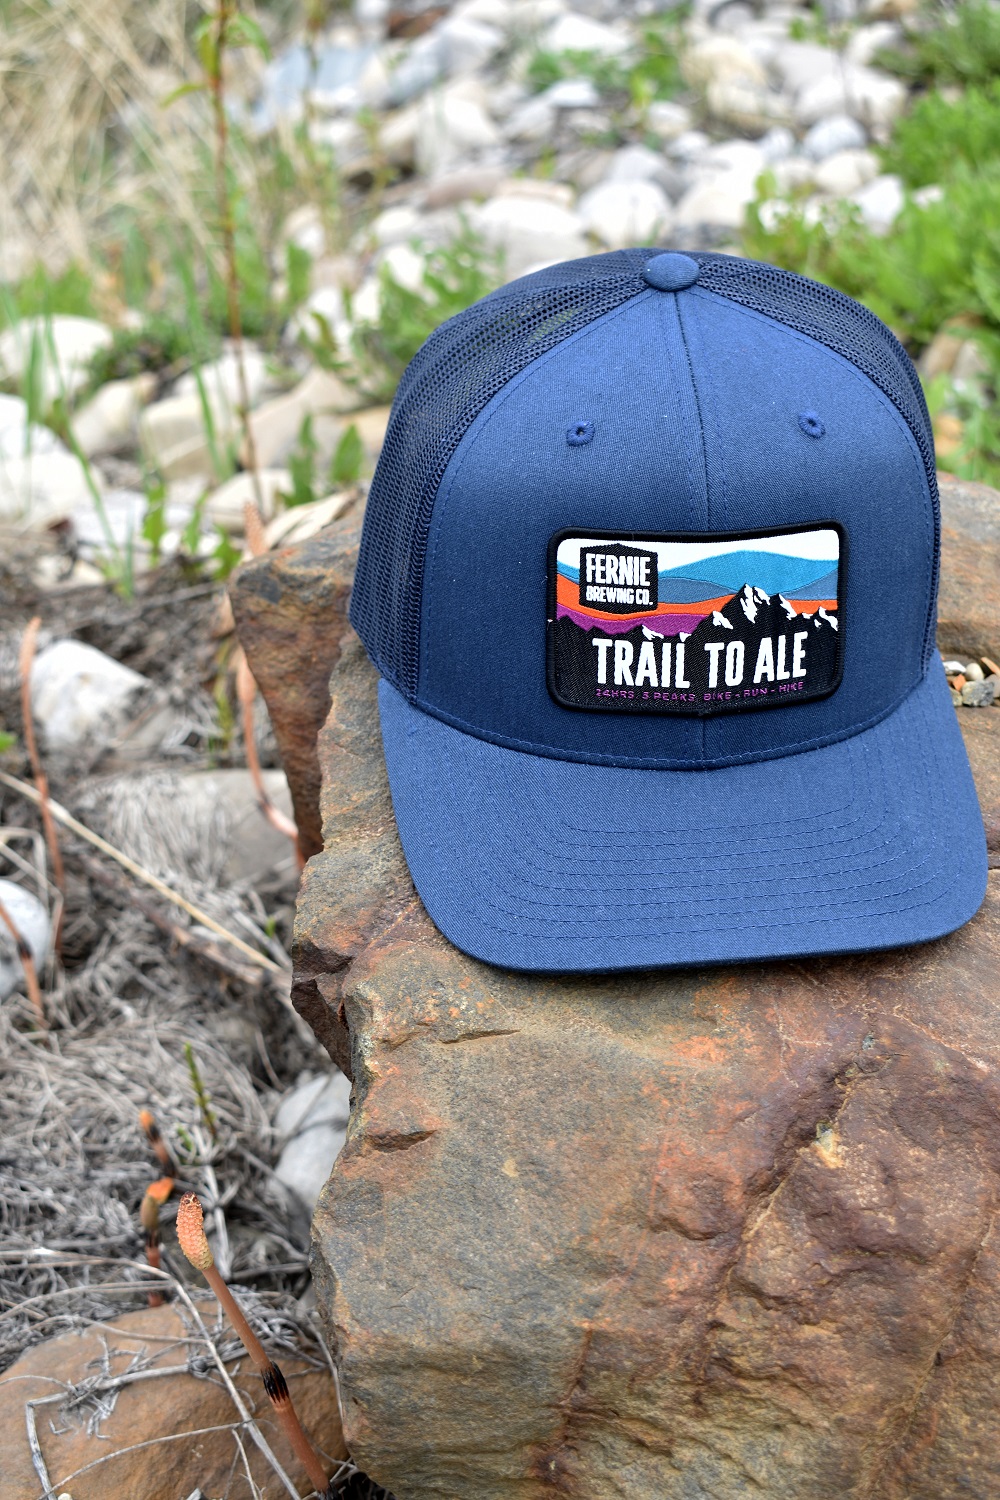 A Trail to Ale hat on a rock.